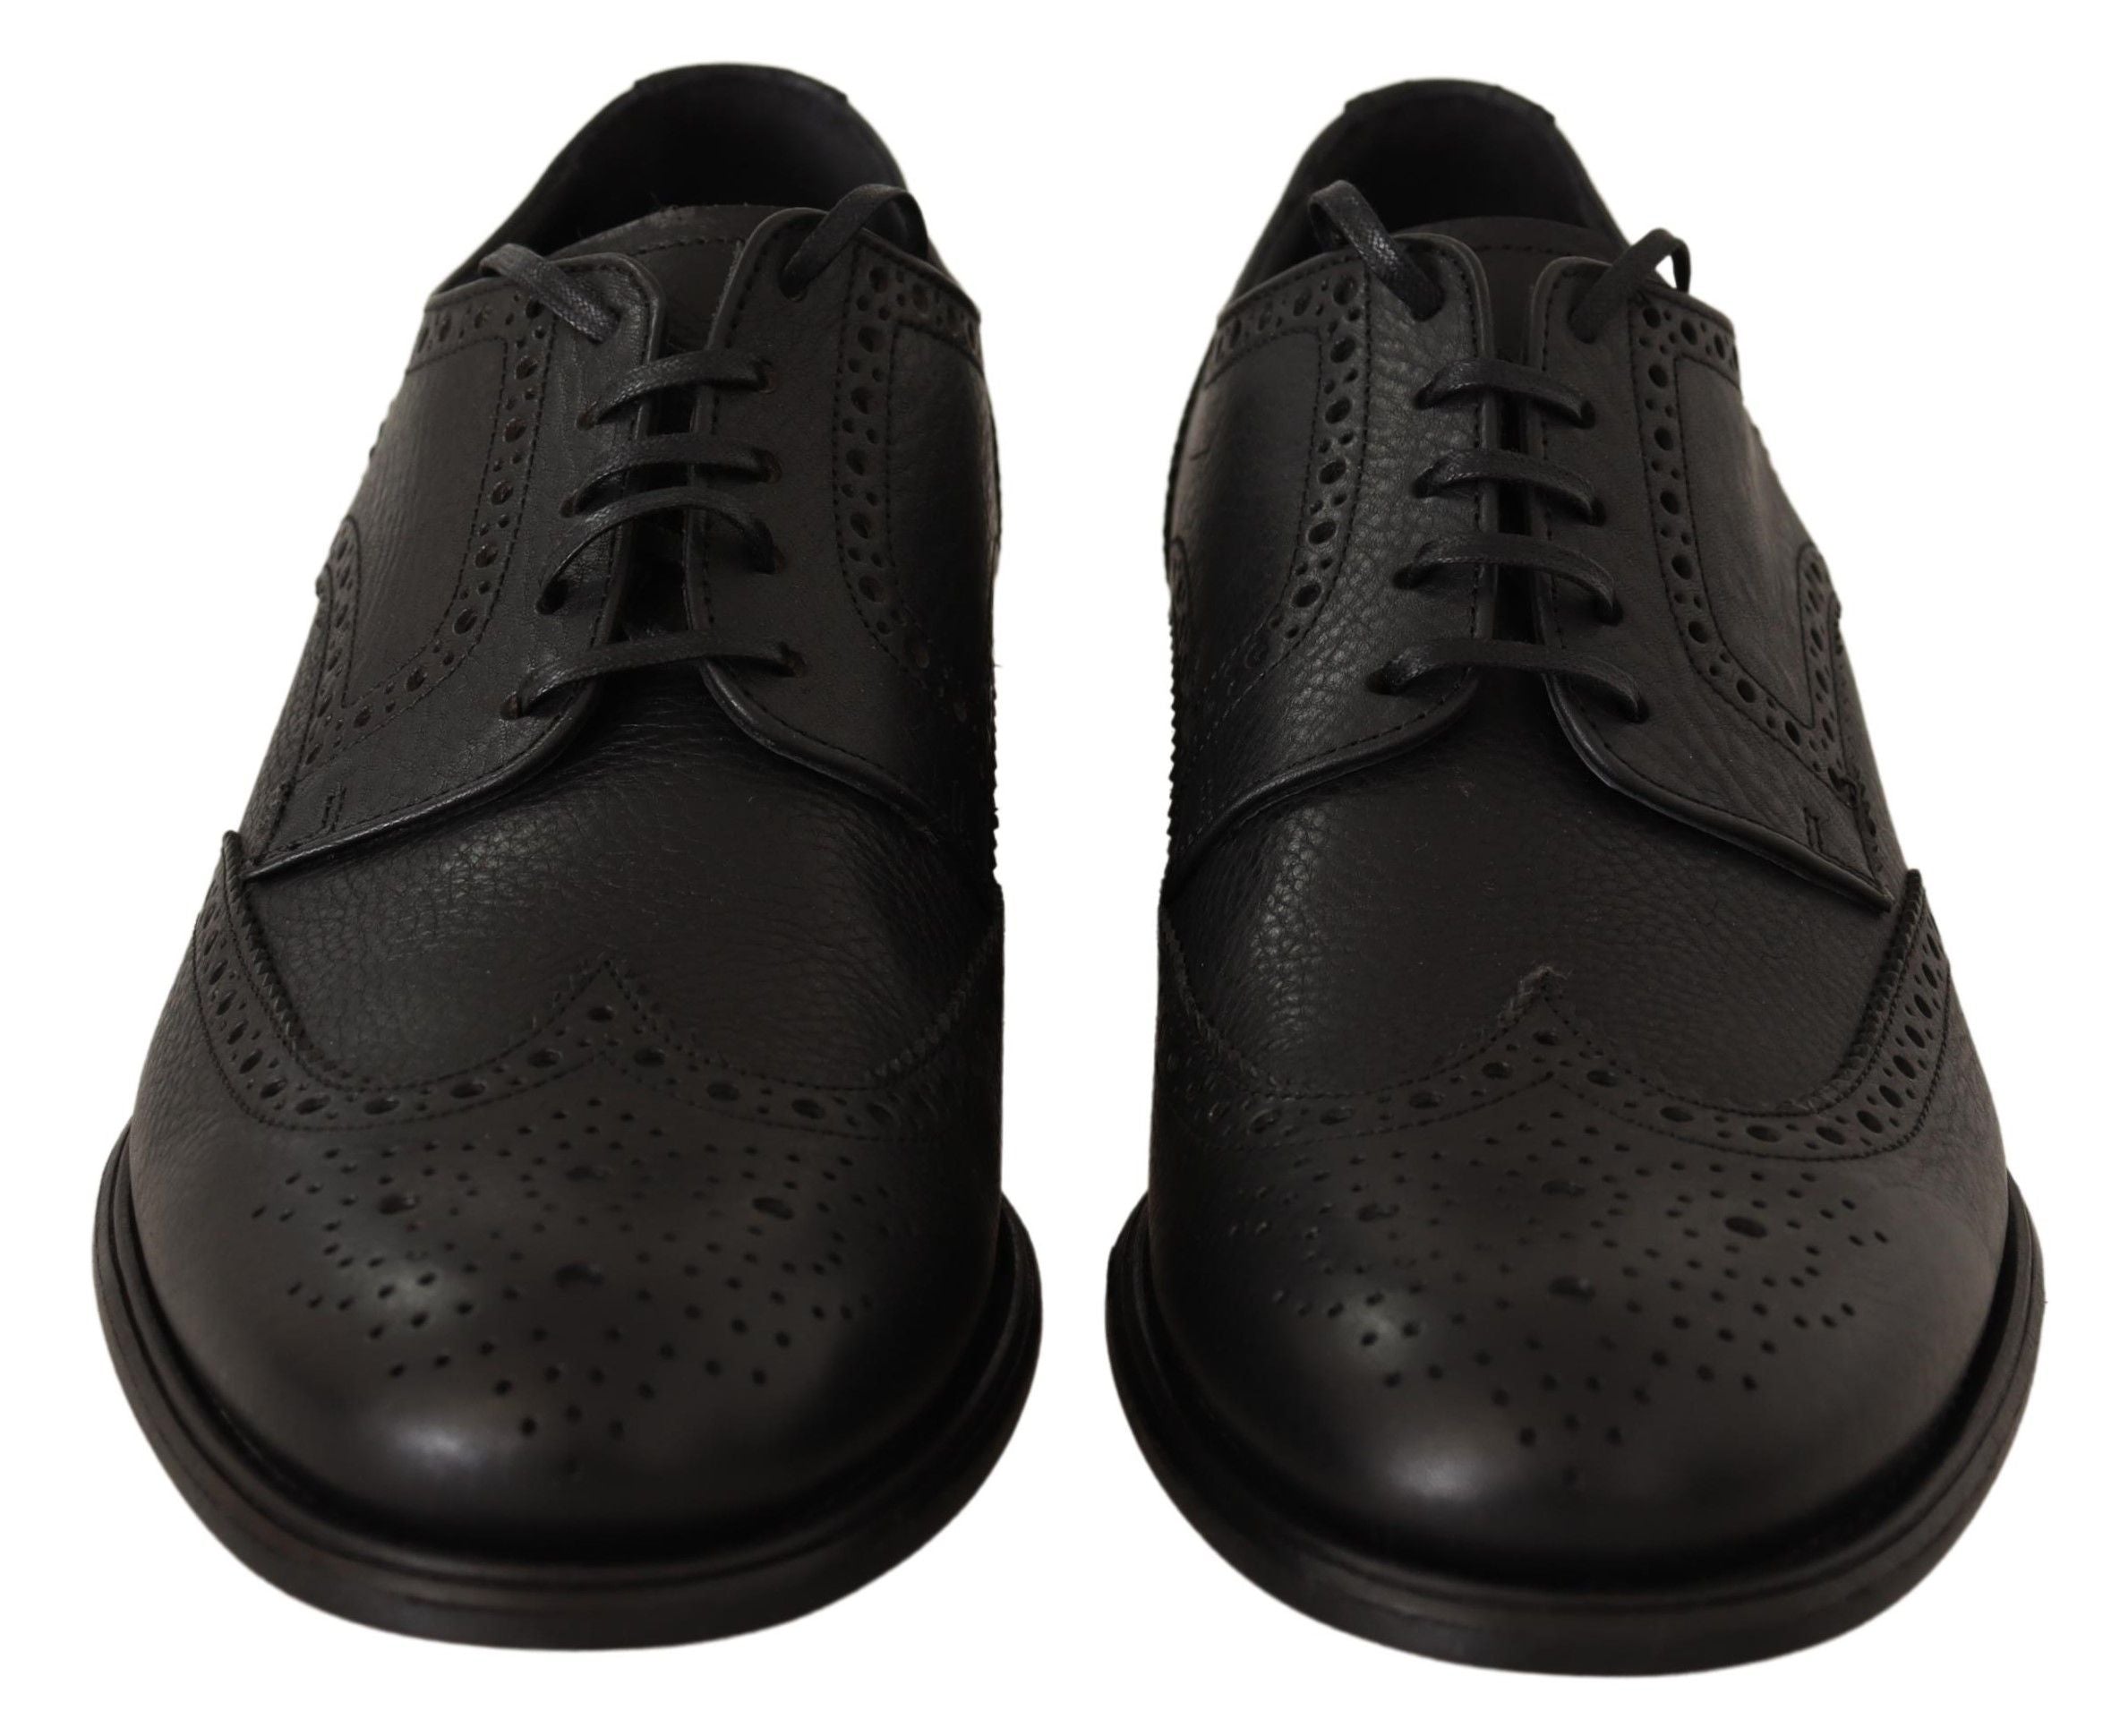 Dolce & Gabbana Black Leather Oxford Wingtip Formal Dress Shoes